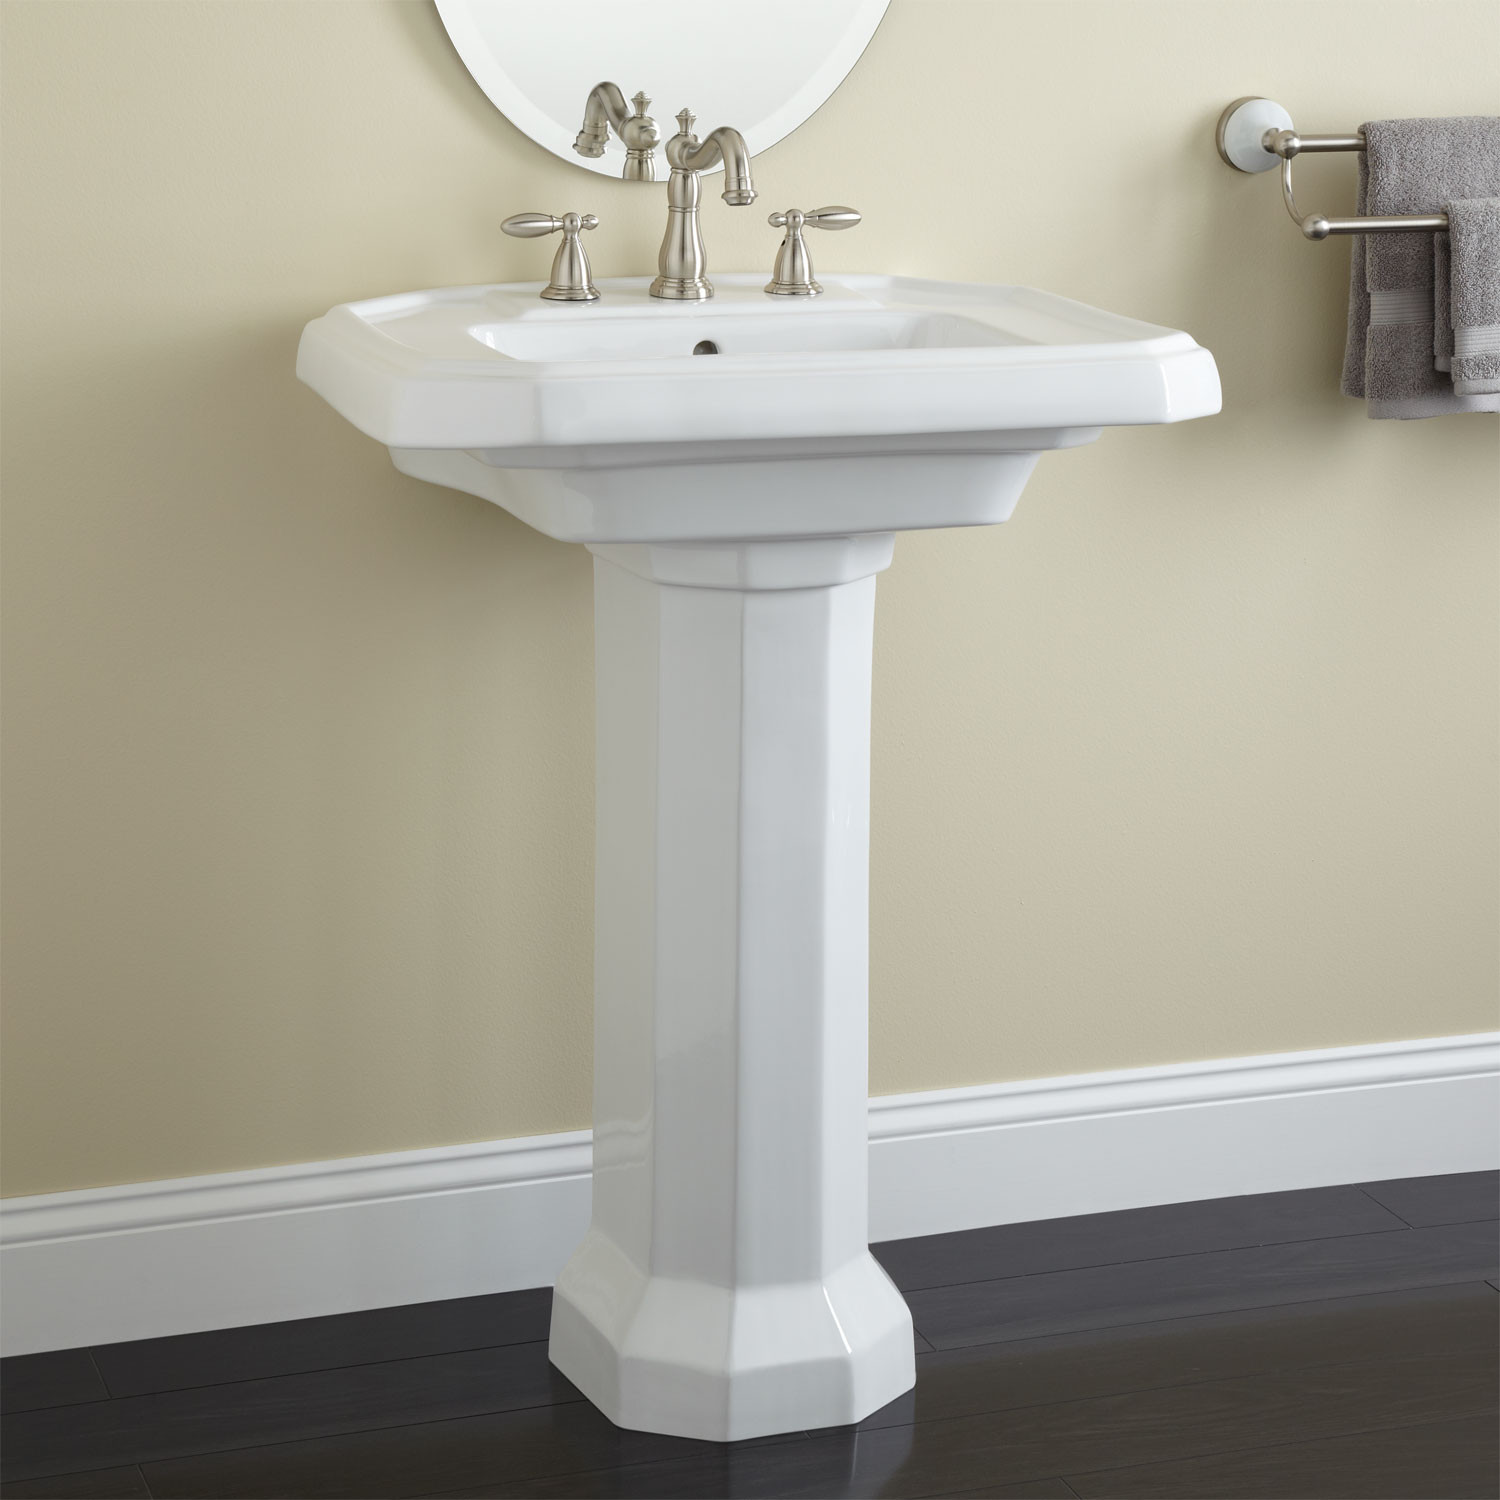 Best ideas about Pedestal Bathroom Sinks
. Save or Pin Drexel Porcelain Pedestal Sink Pedestal Sinks Bathroom Now.